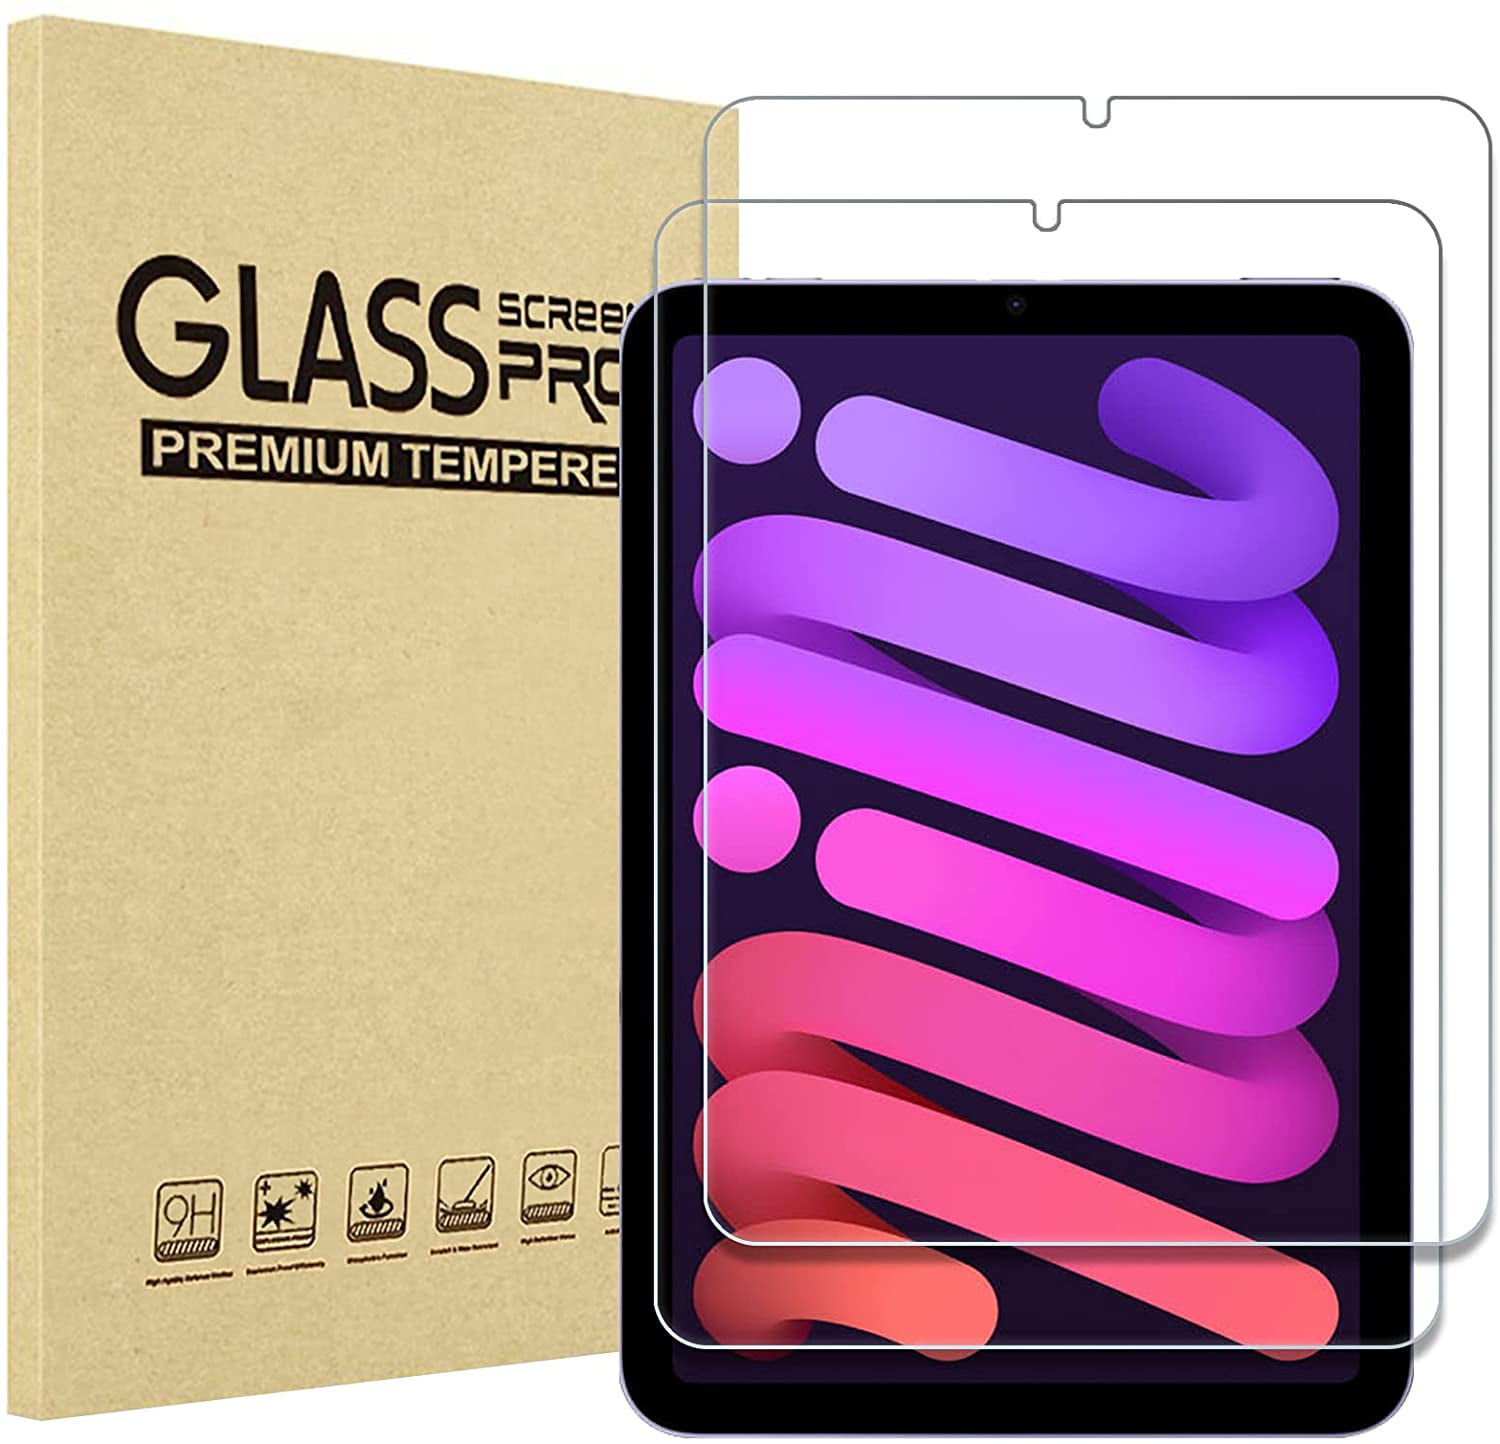 Tech Armor Maximum Screen Protection ipad Air 2 iPad Air 2 pk Crystal Clear  Seal